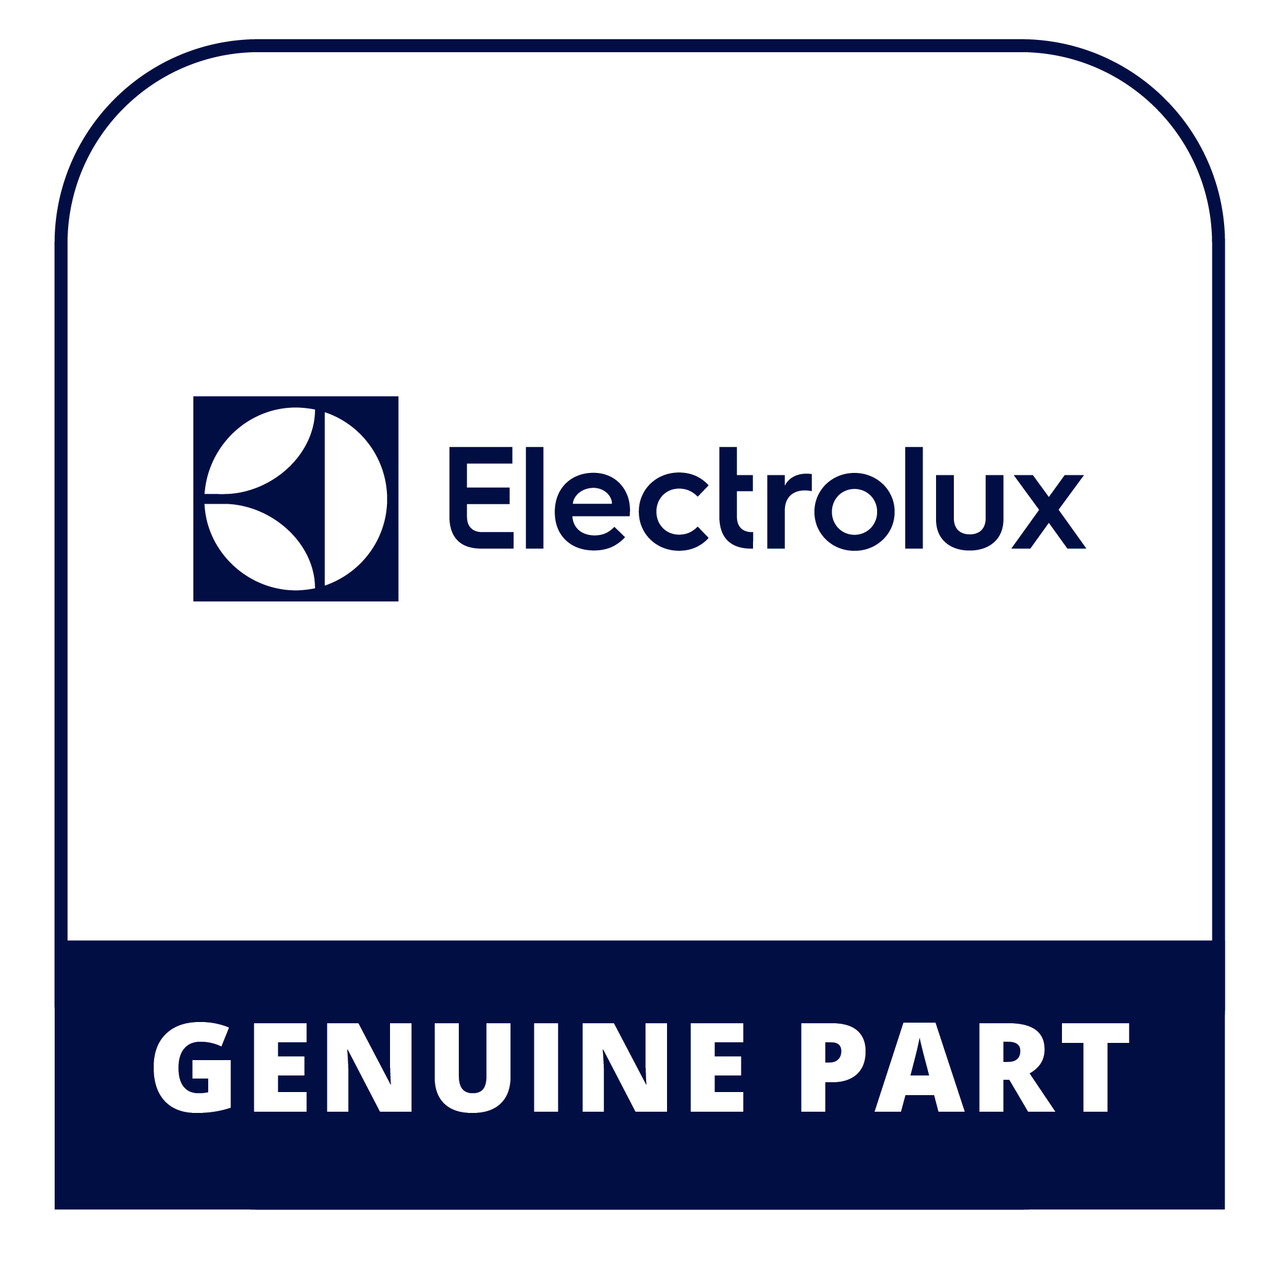 Frigidaire - Electrolux 5304519522 Stop - Genuine Electrolux Part